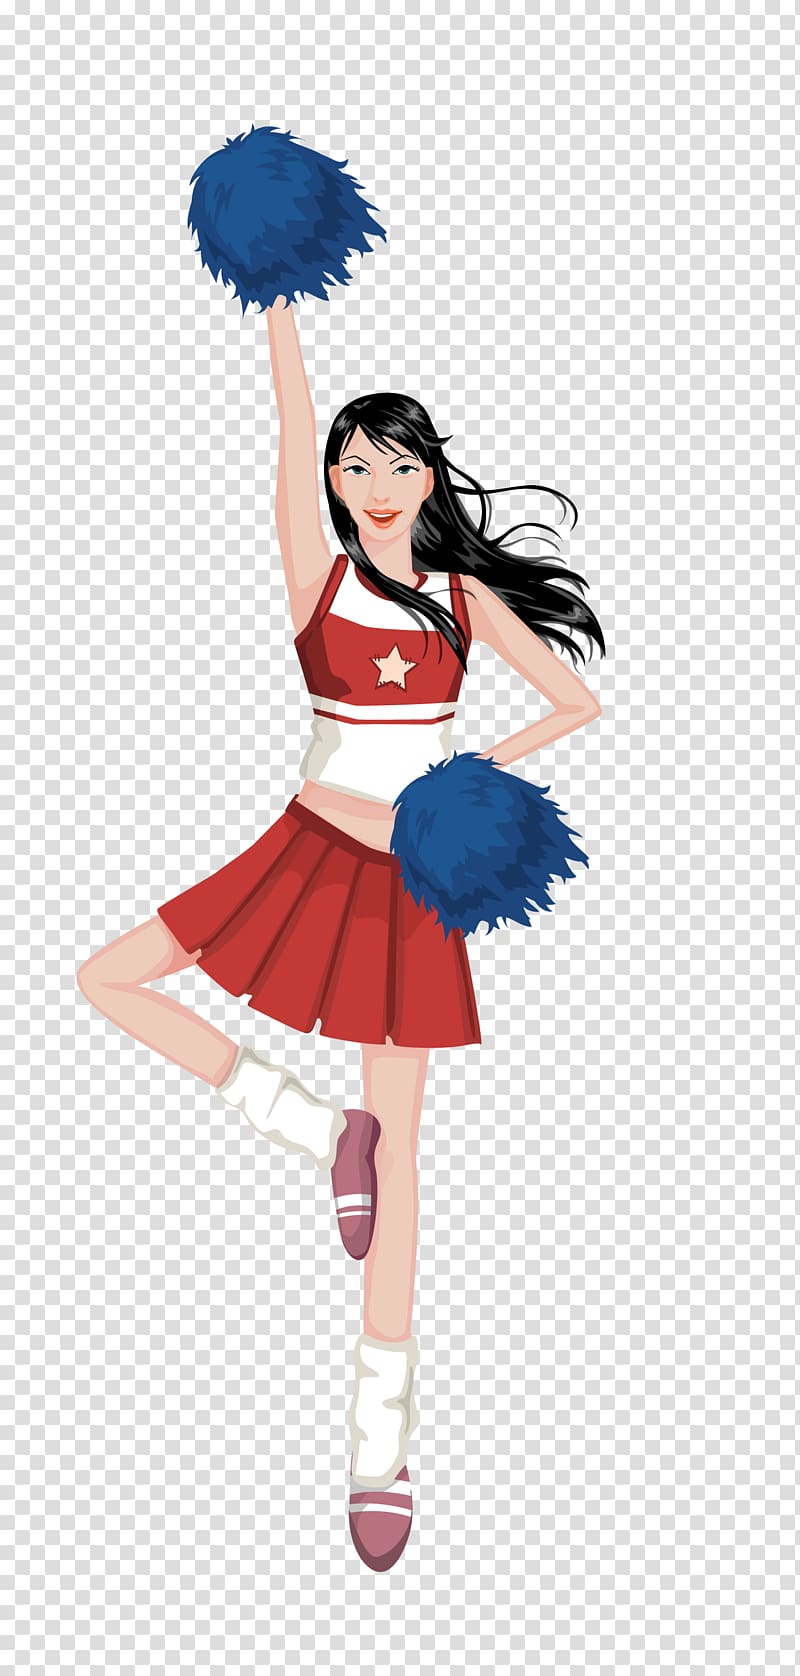 Cartoon Cheerleader Illustration, Cheerleaders transparent background PNG clipart